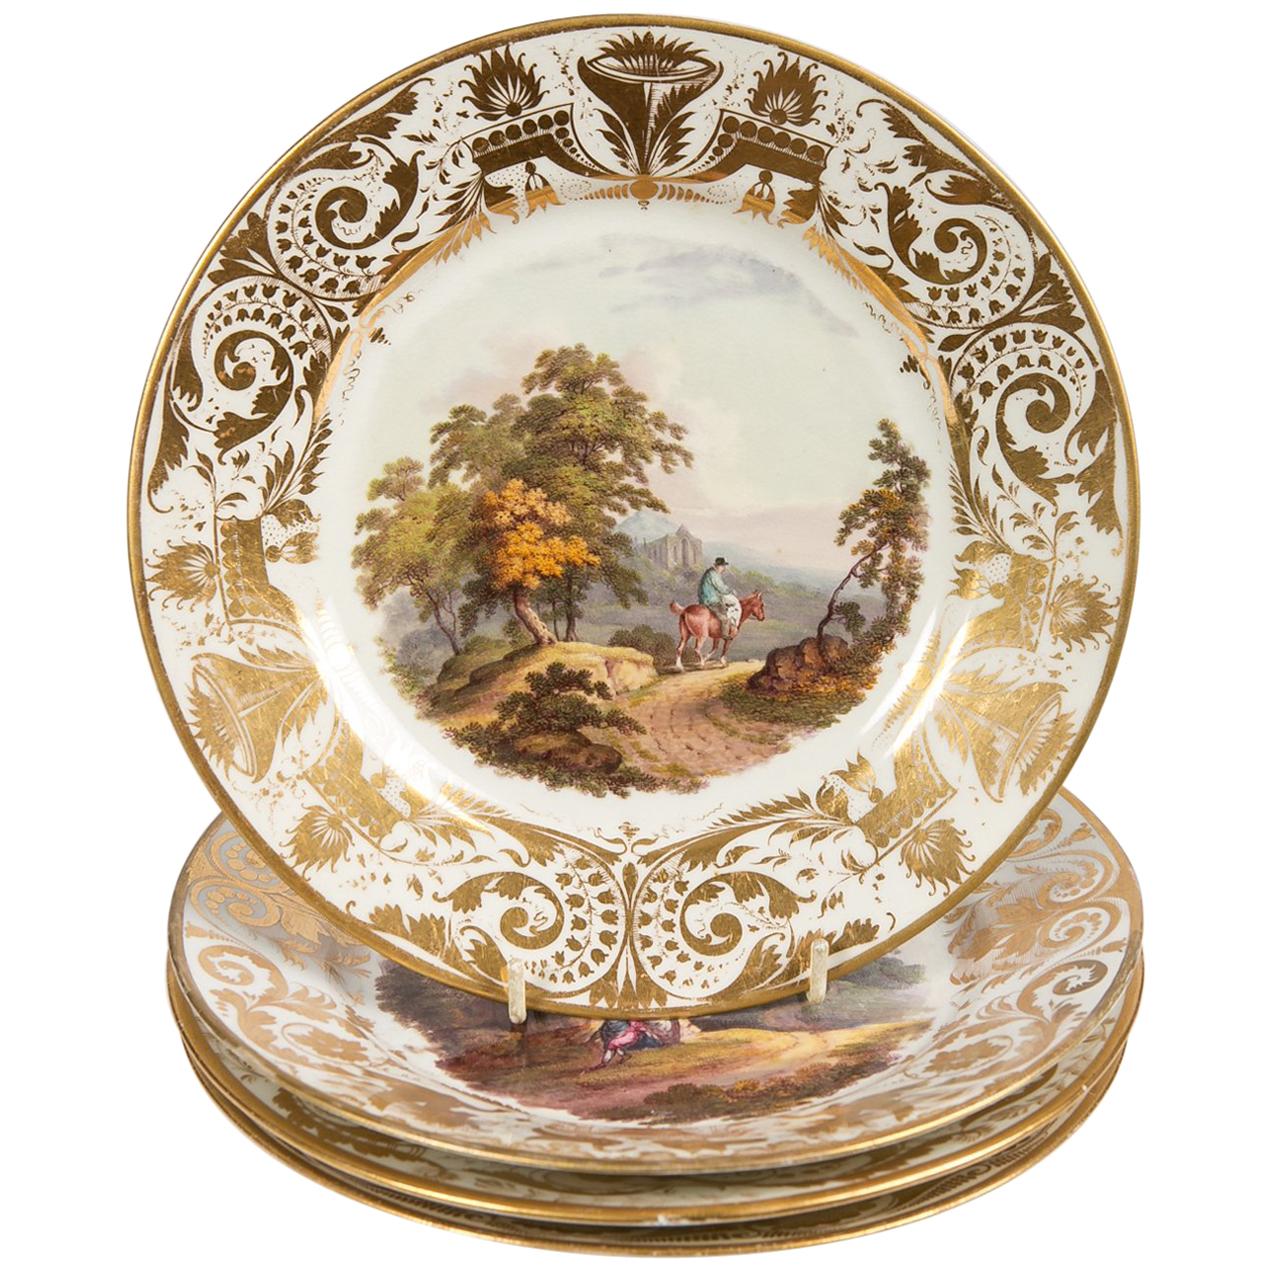 Antique Porcelain Dishes with Hand-Painted Landscape Scenes